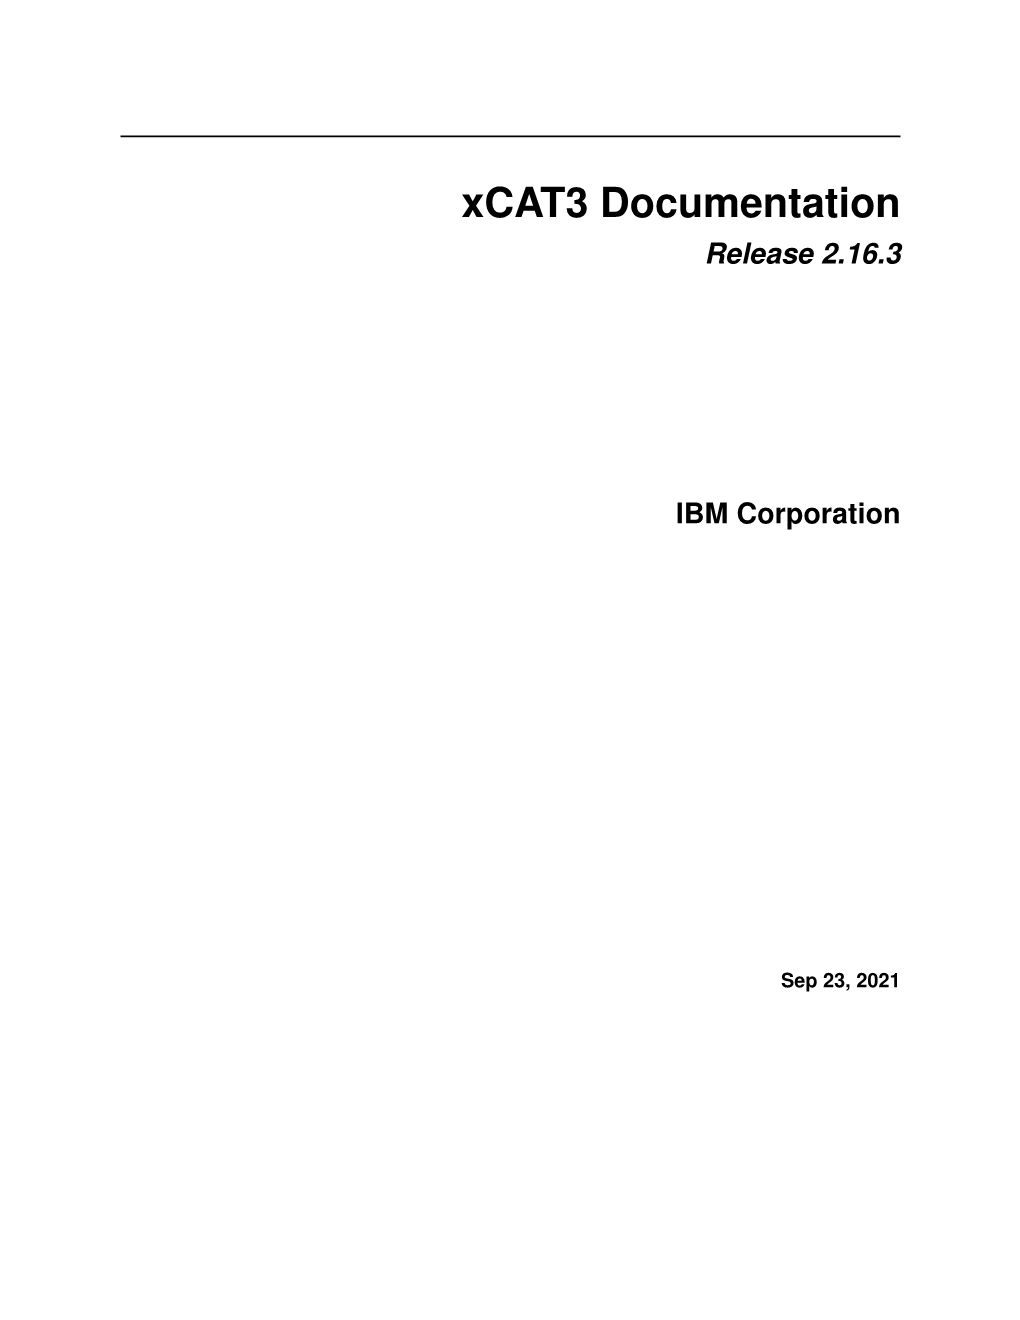 Xcat3 Documentation Release 2.16.3